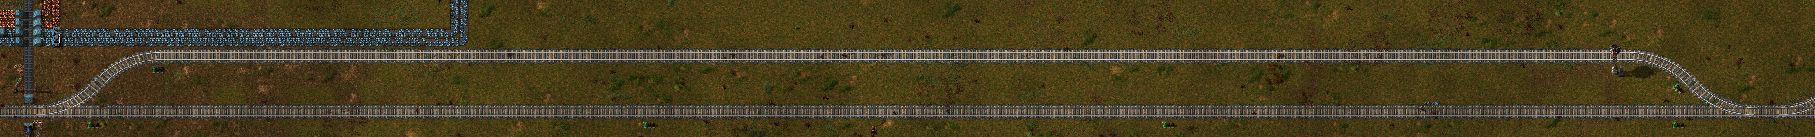 rail siding.jpg